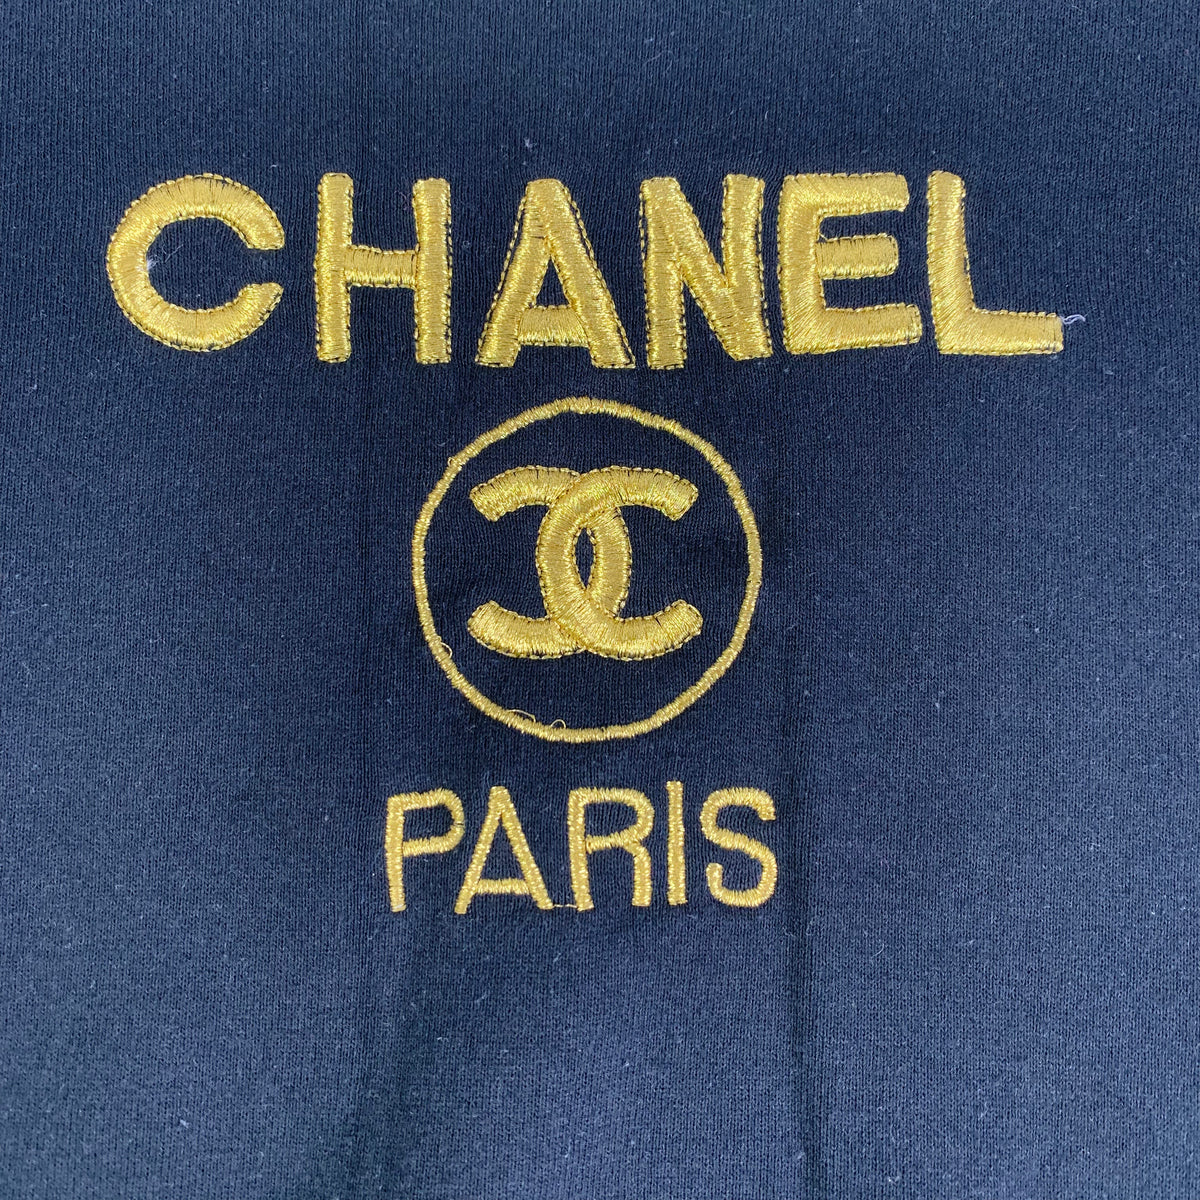 Vintage Chanel &quot;Paris&quot; Crewneck Sweatshirt - jointcustodydc